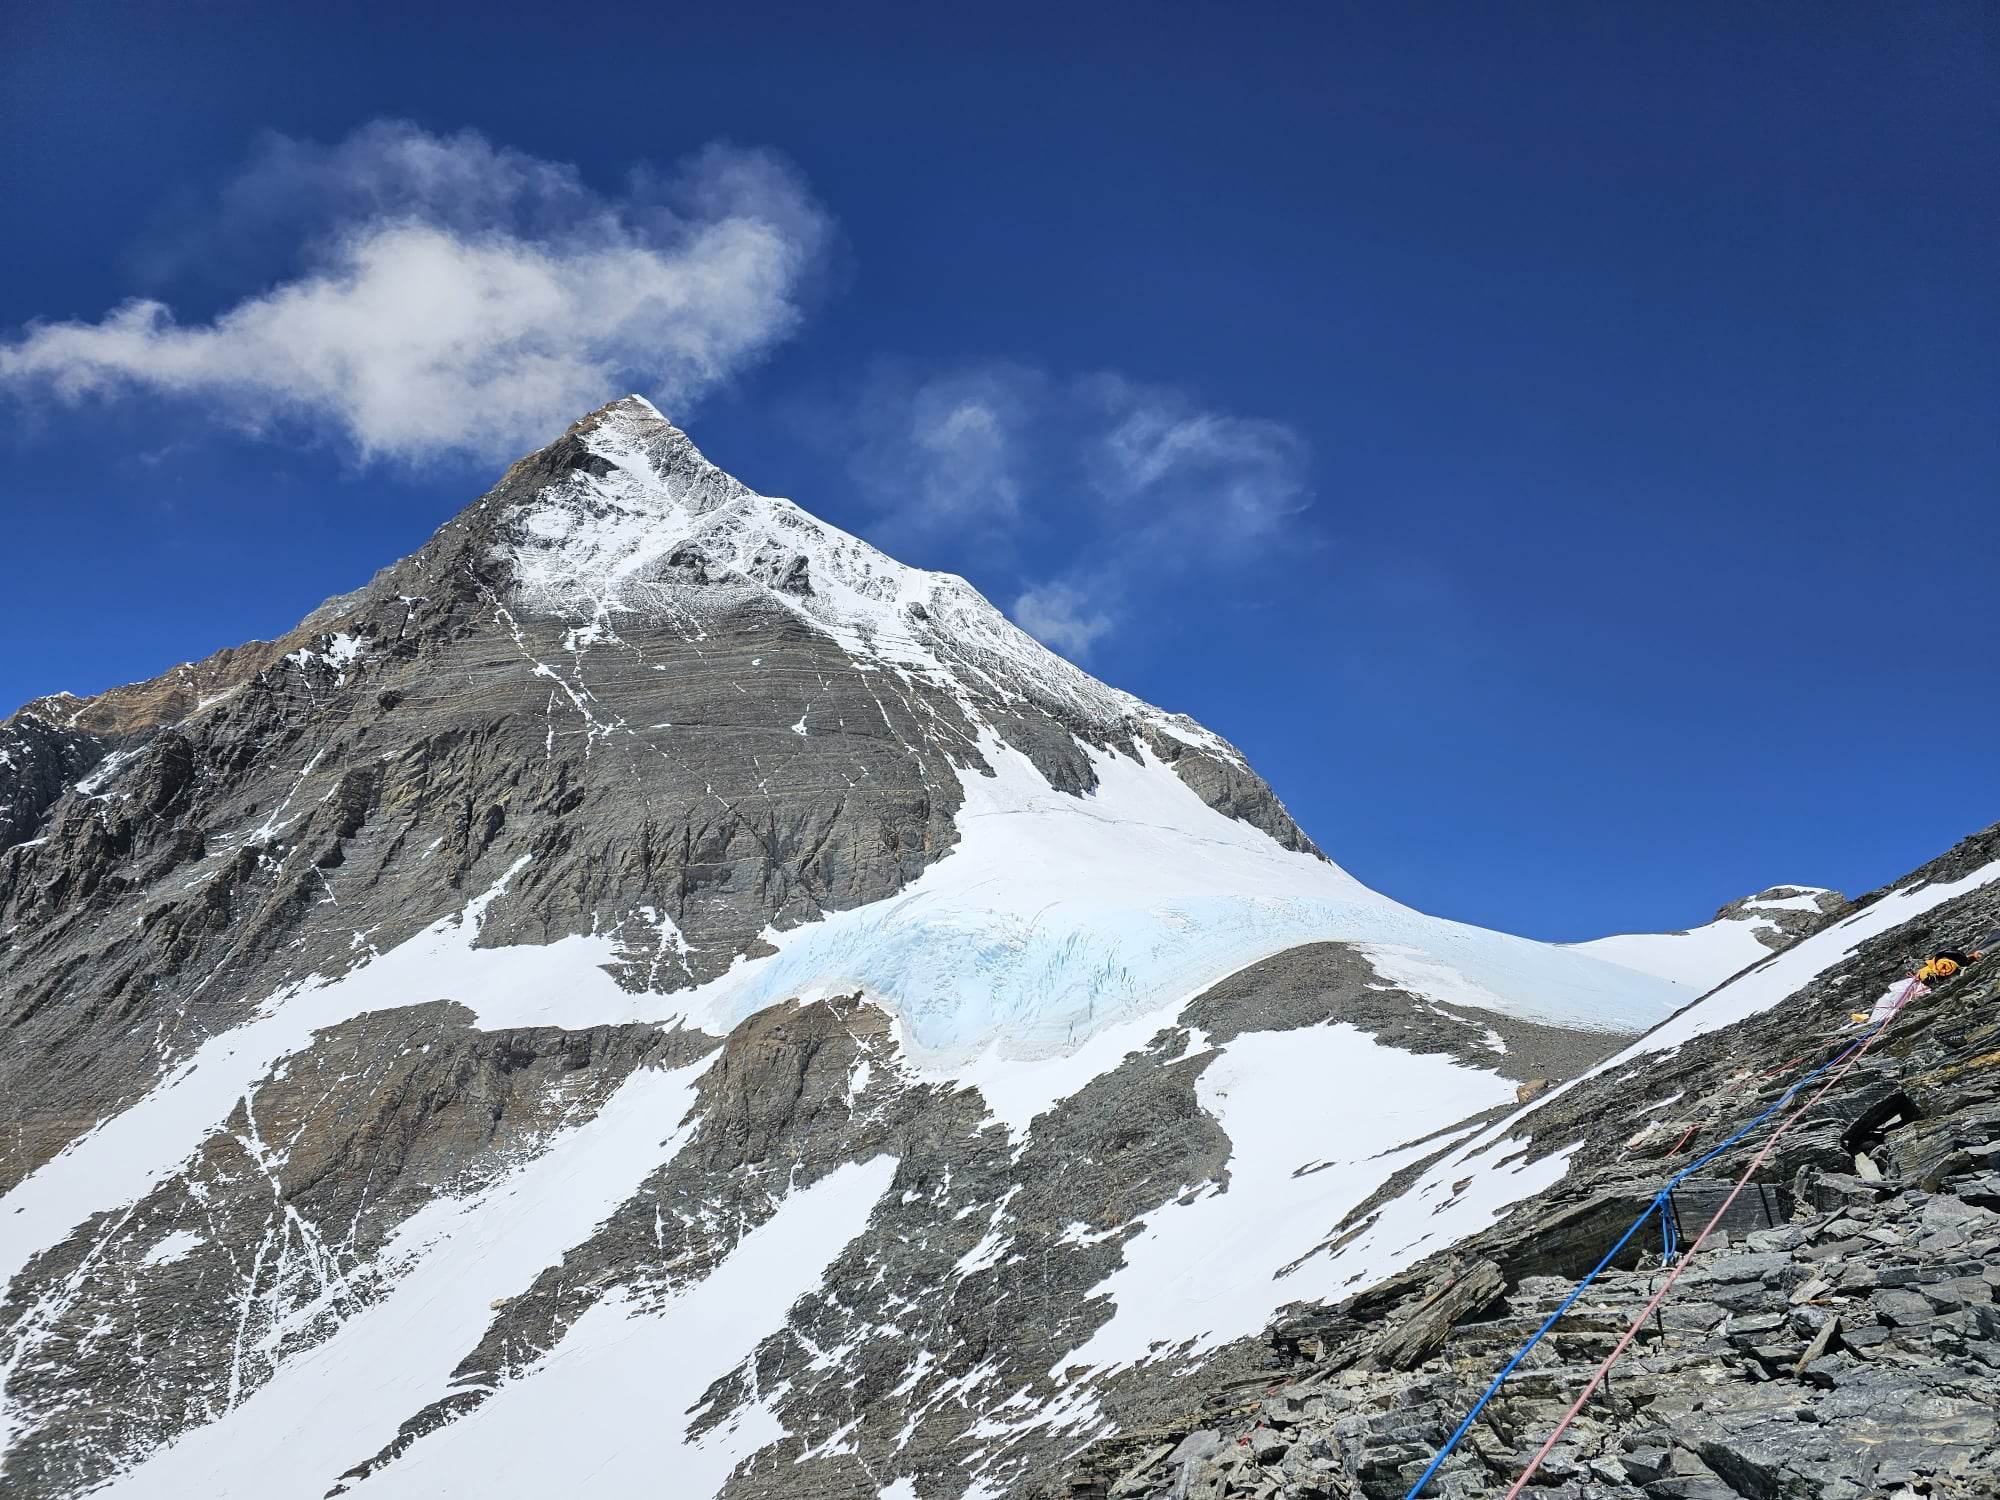 Unfolding Drama of Hungarian Climber on Mount Everest